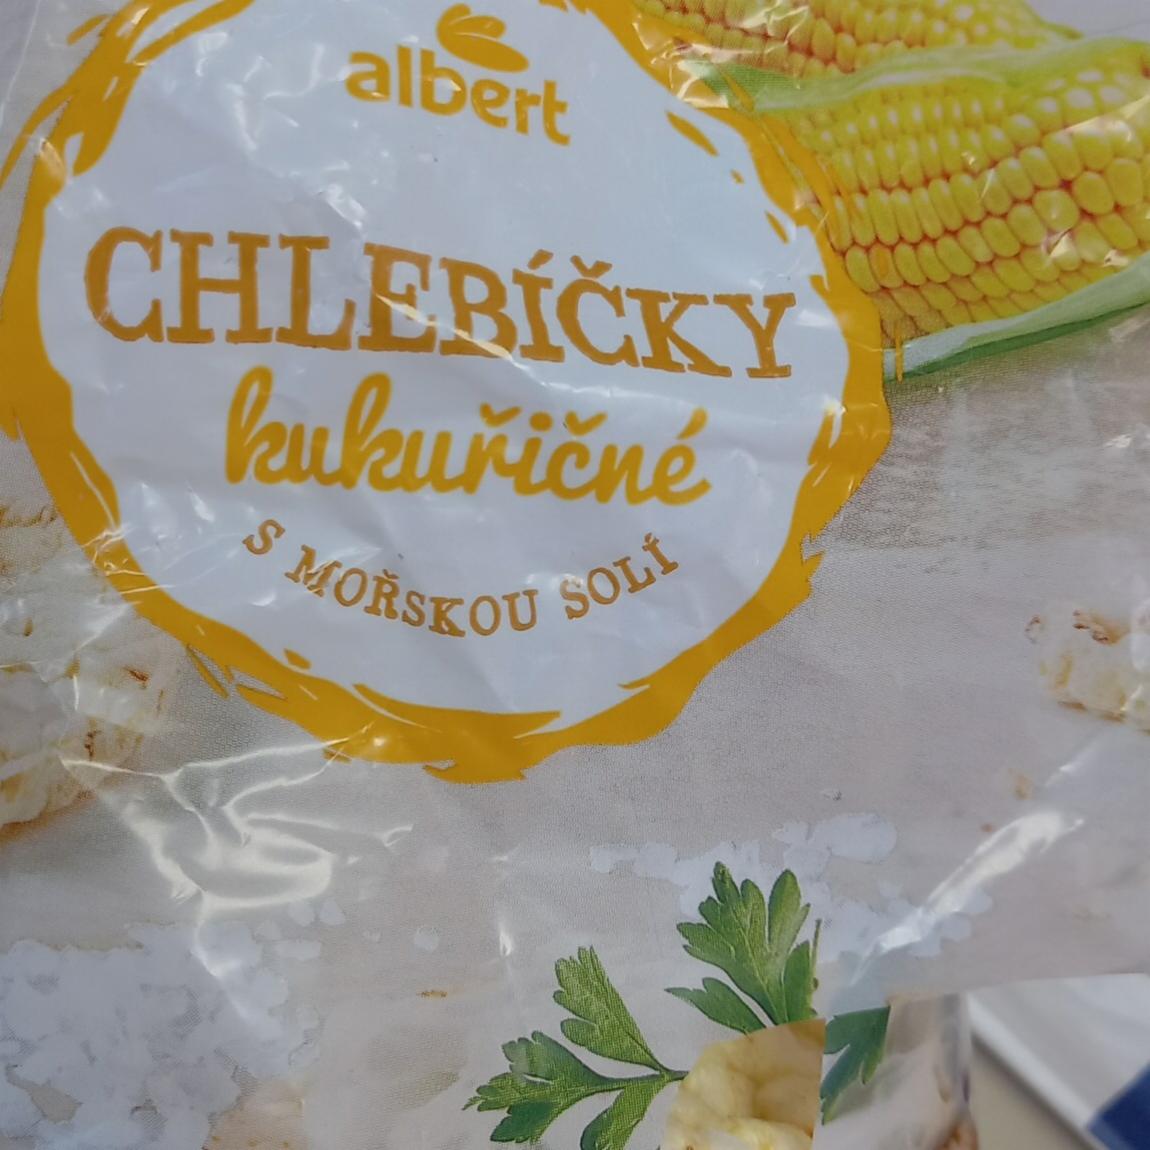 Fotografie - kukuričné chlebíčky s morskou soľou Albert